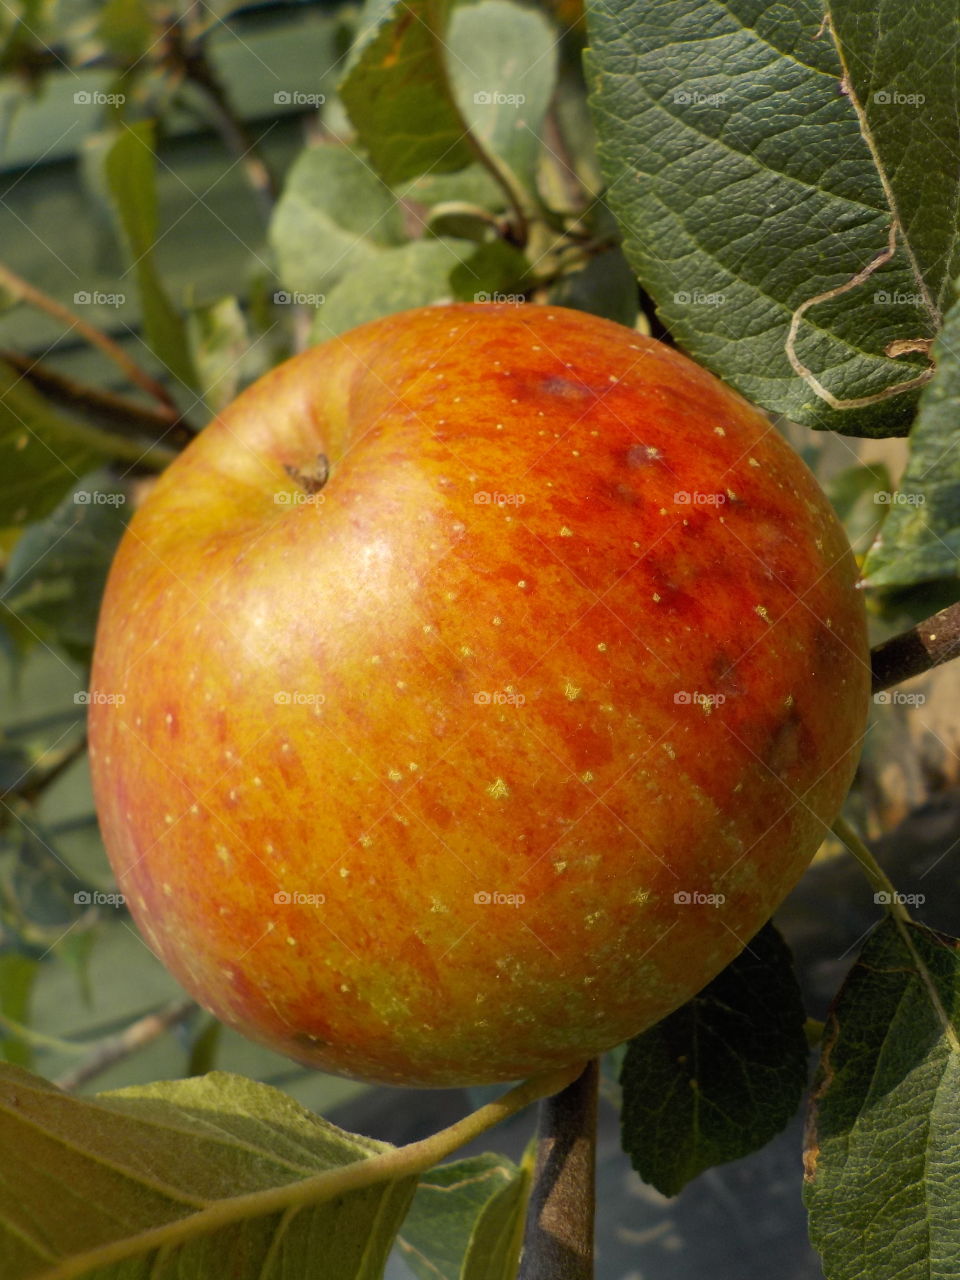 My organic apples 